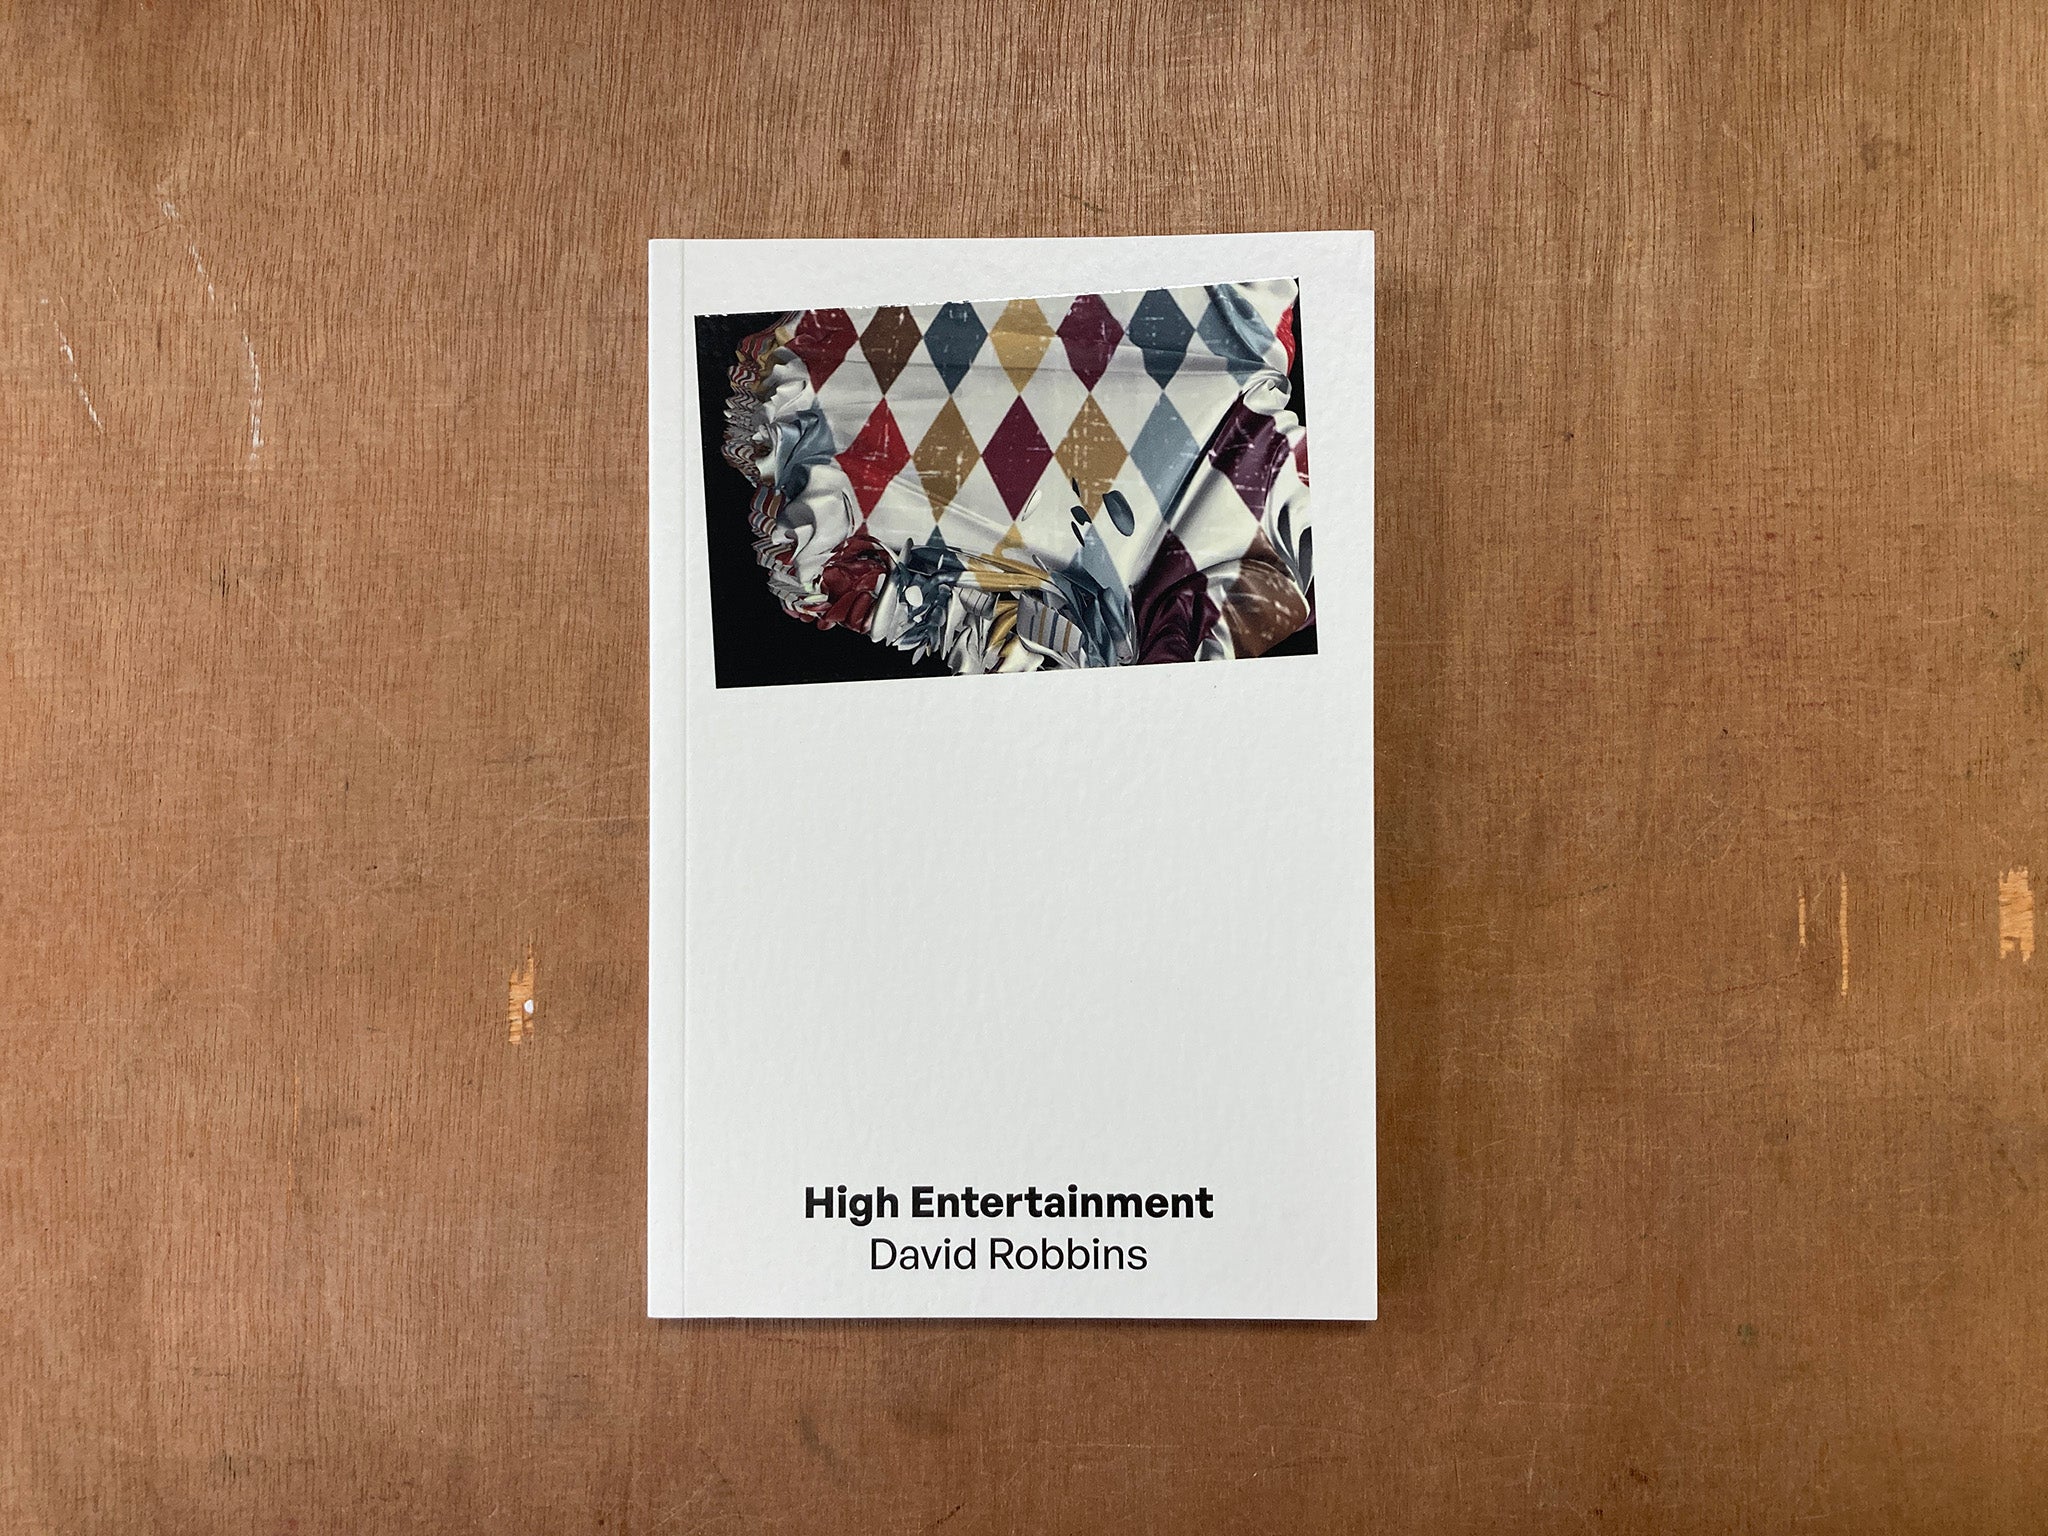 HIGH ENTERTAINMENT by David Robbins